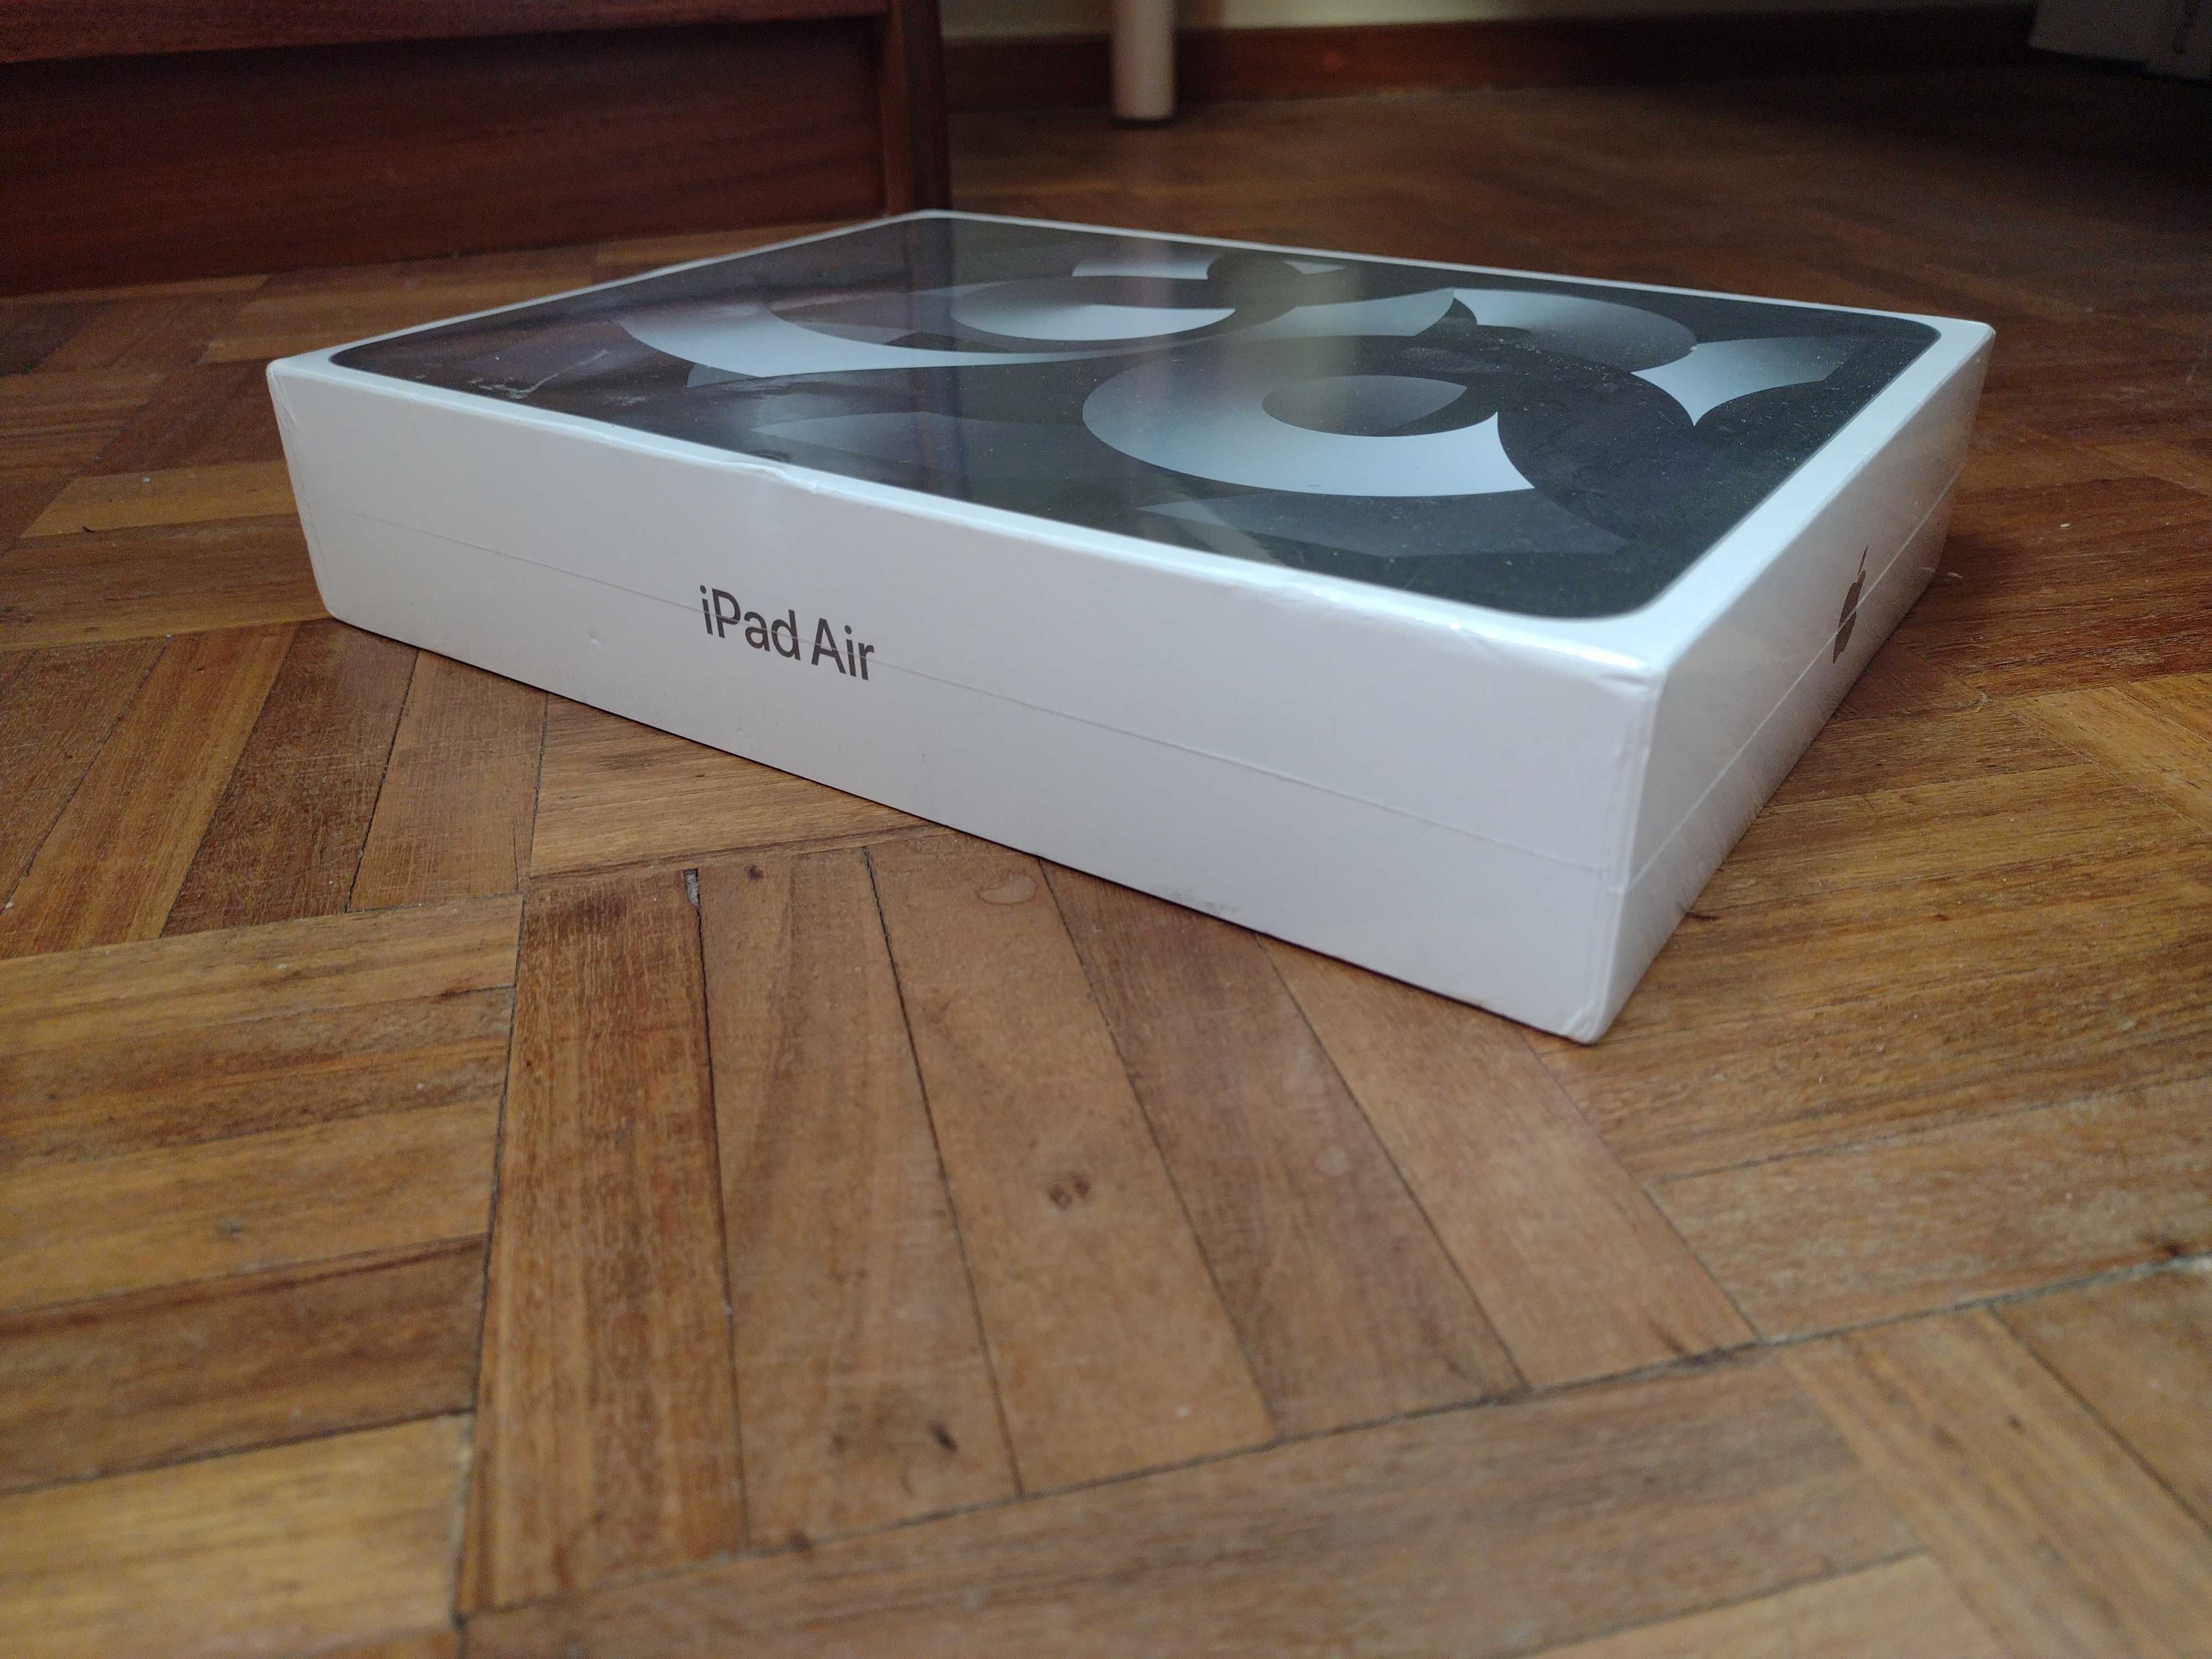 iPad air novo com caixa